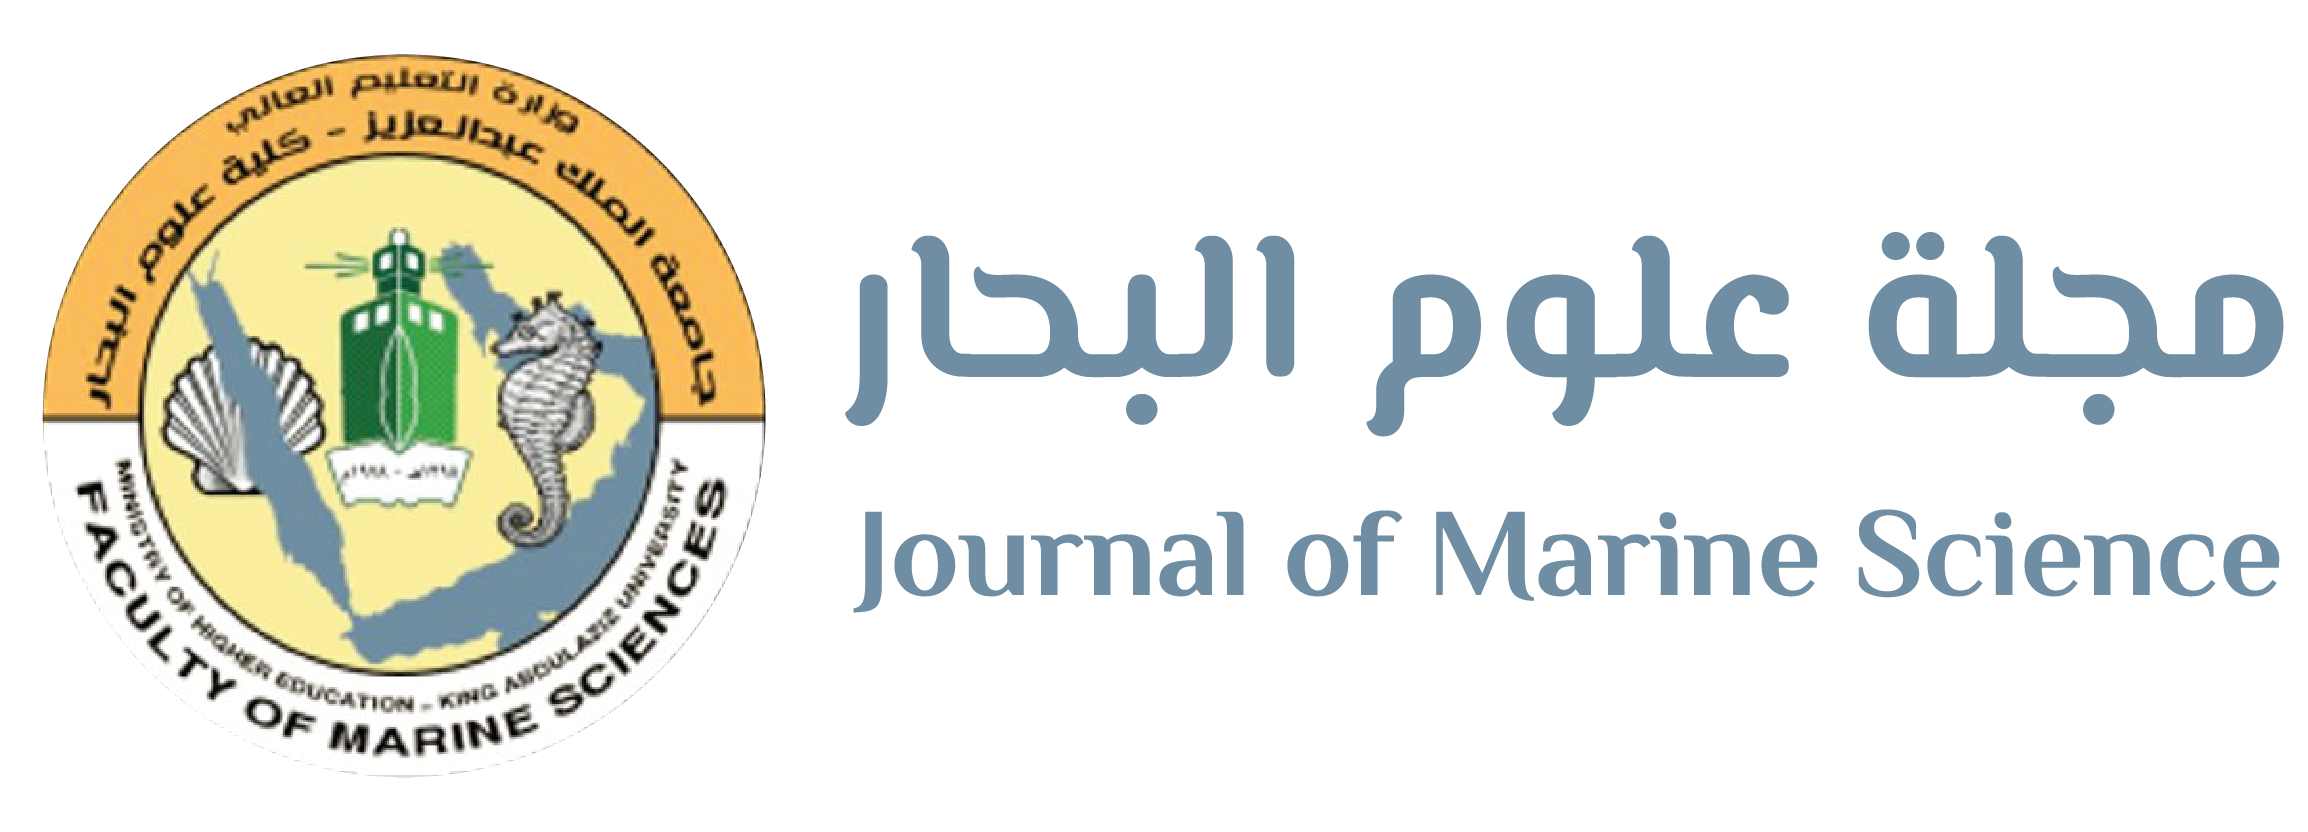 Journal of Marine Science